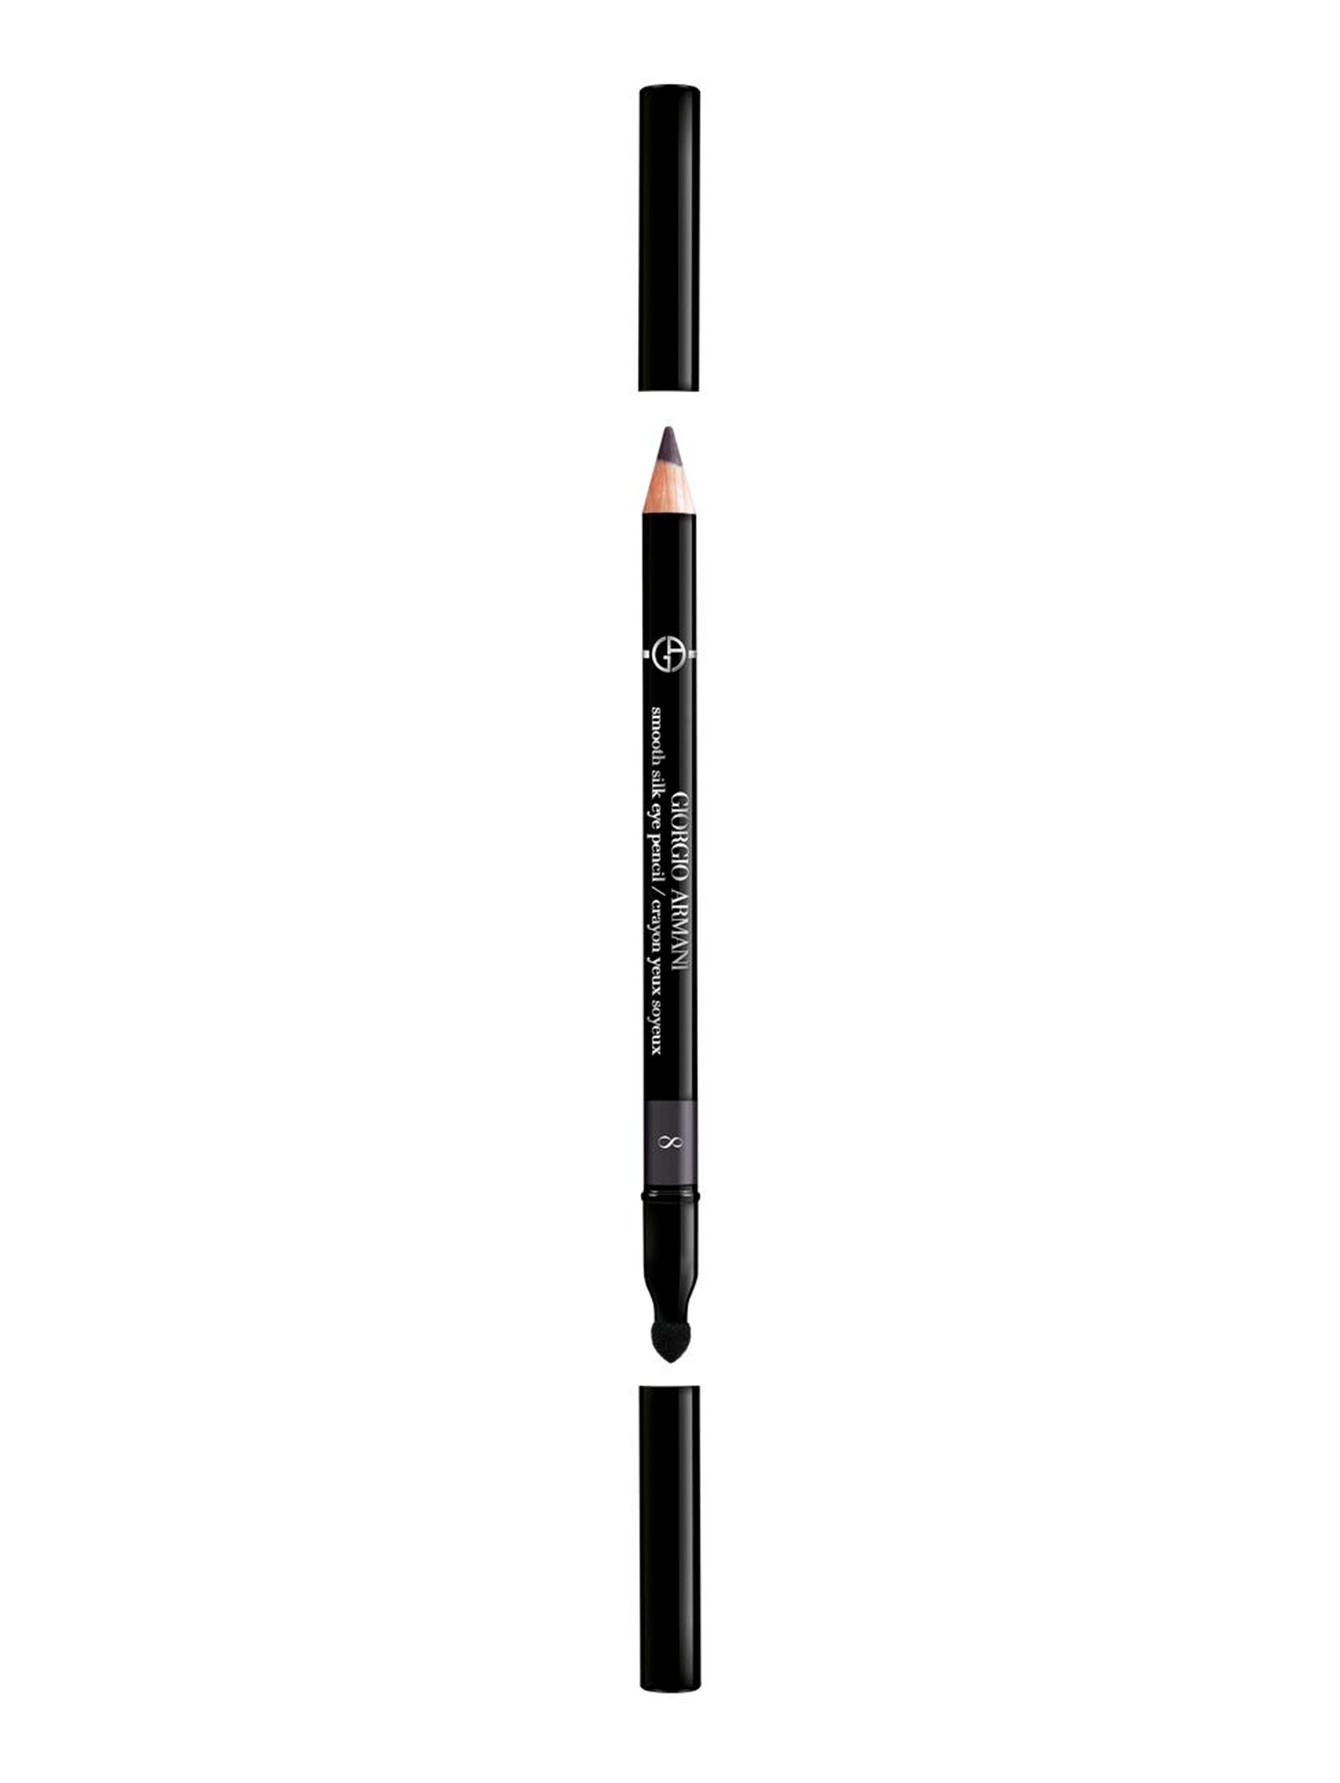 Карандаш для глаз - №08, Smooth Silk eye pencil - Общий вид